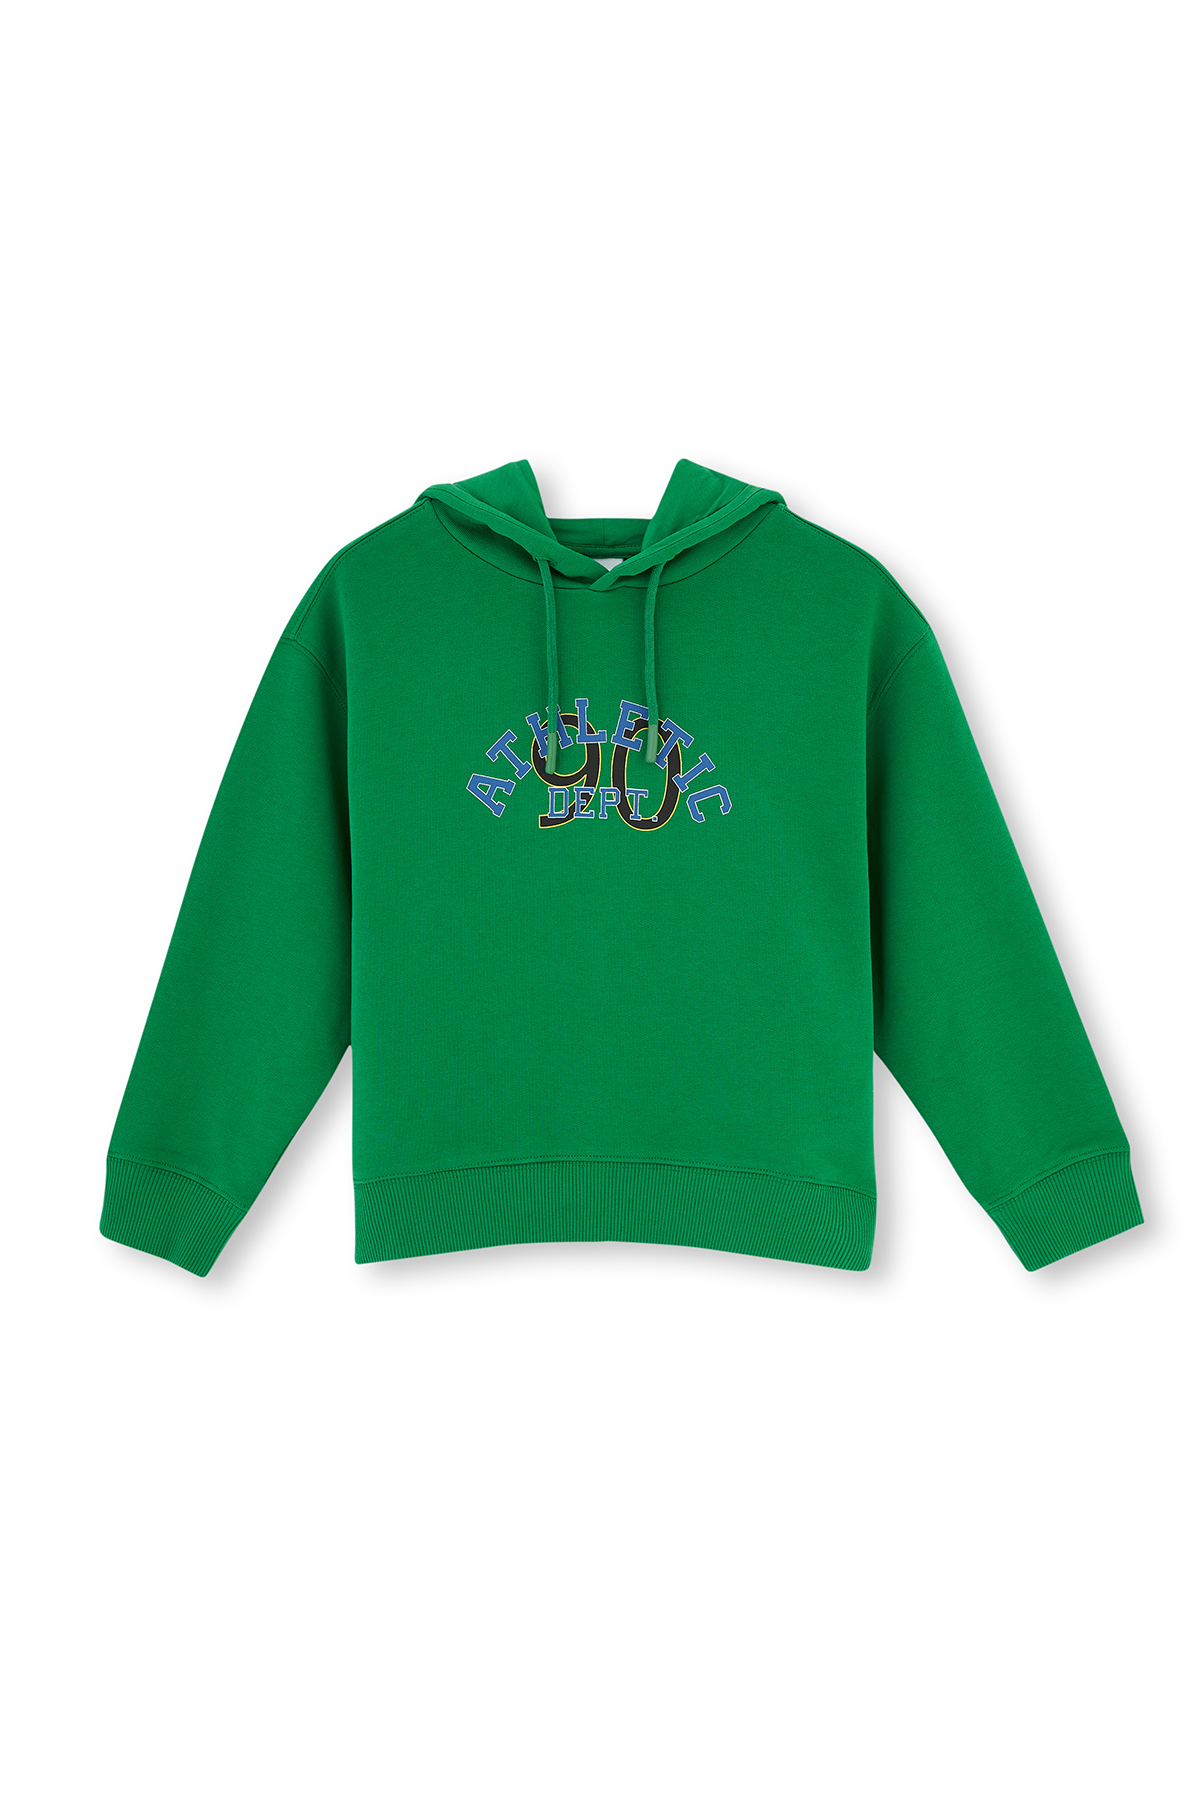 Dagi Green Hooded Motto Printed Unisex Sweatshirts